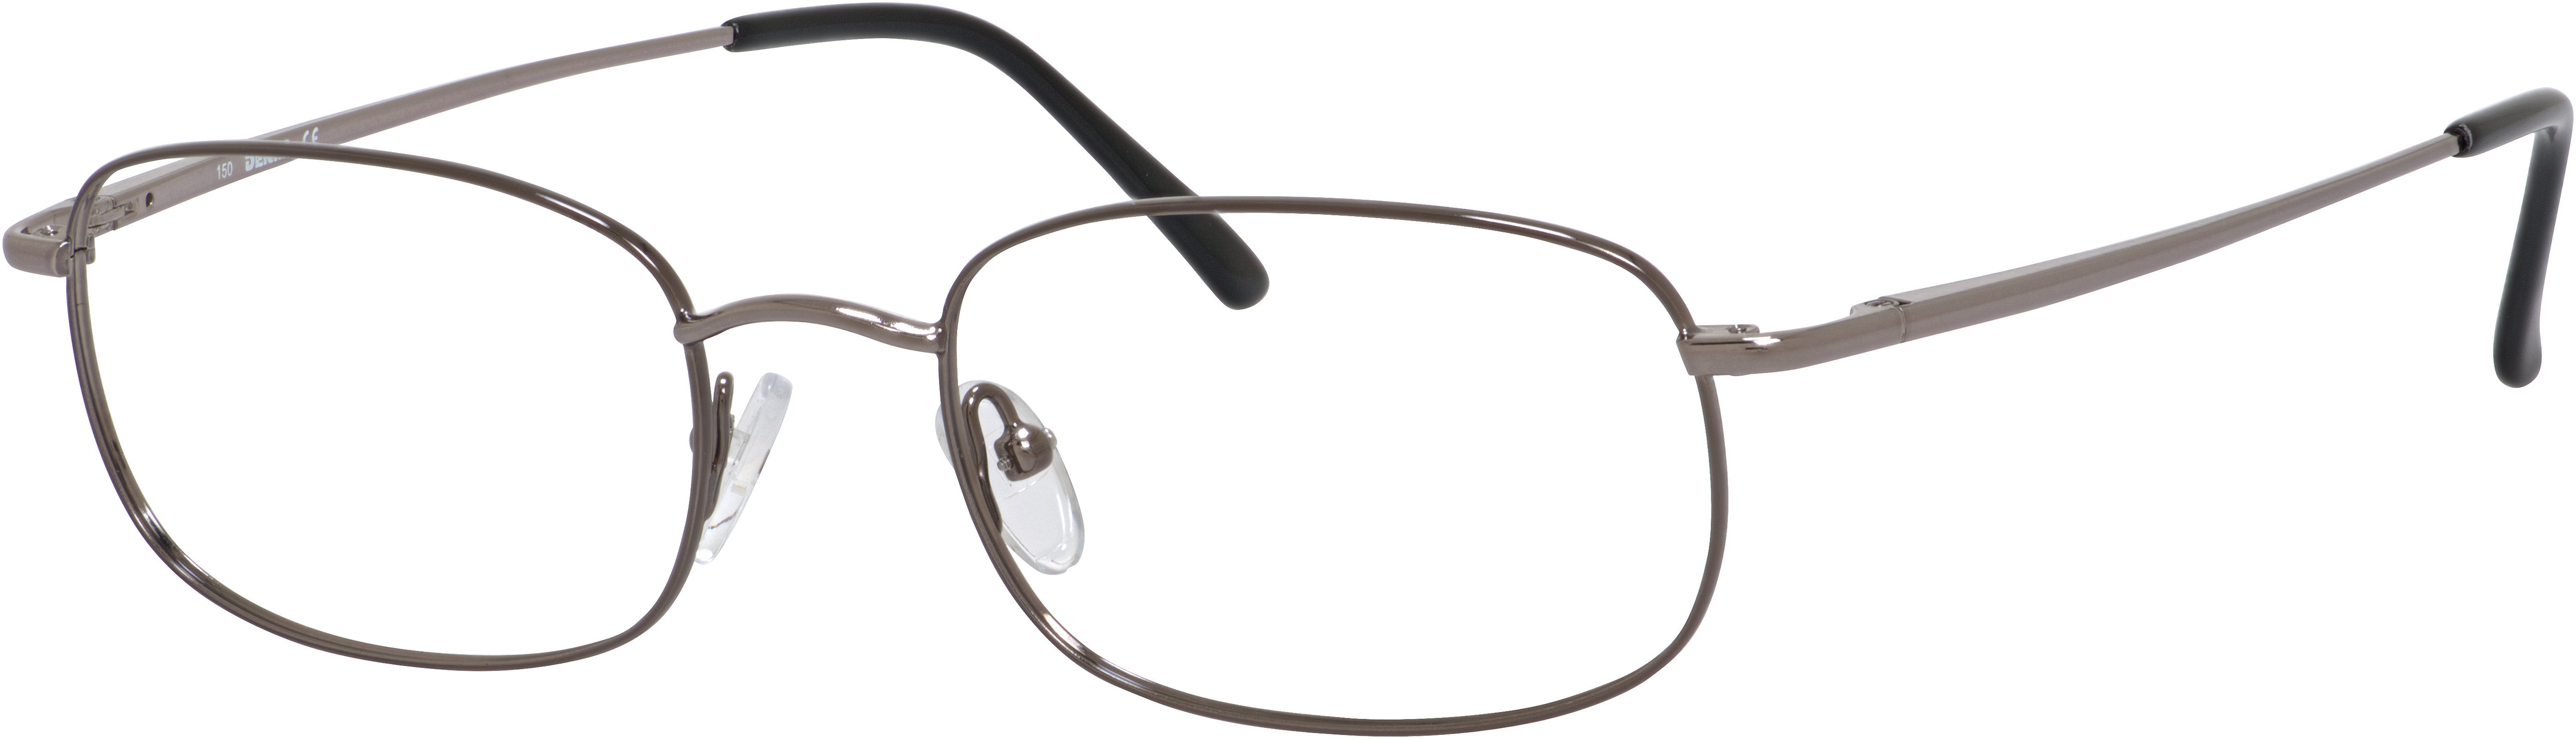  Denim 104 Rectangular Eyeglasses 0X93-0X93  Gunmetal (00 Demo Lens)